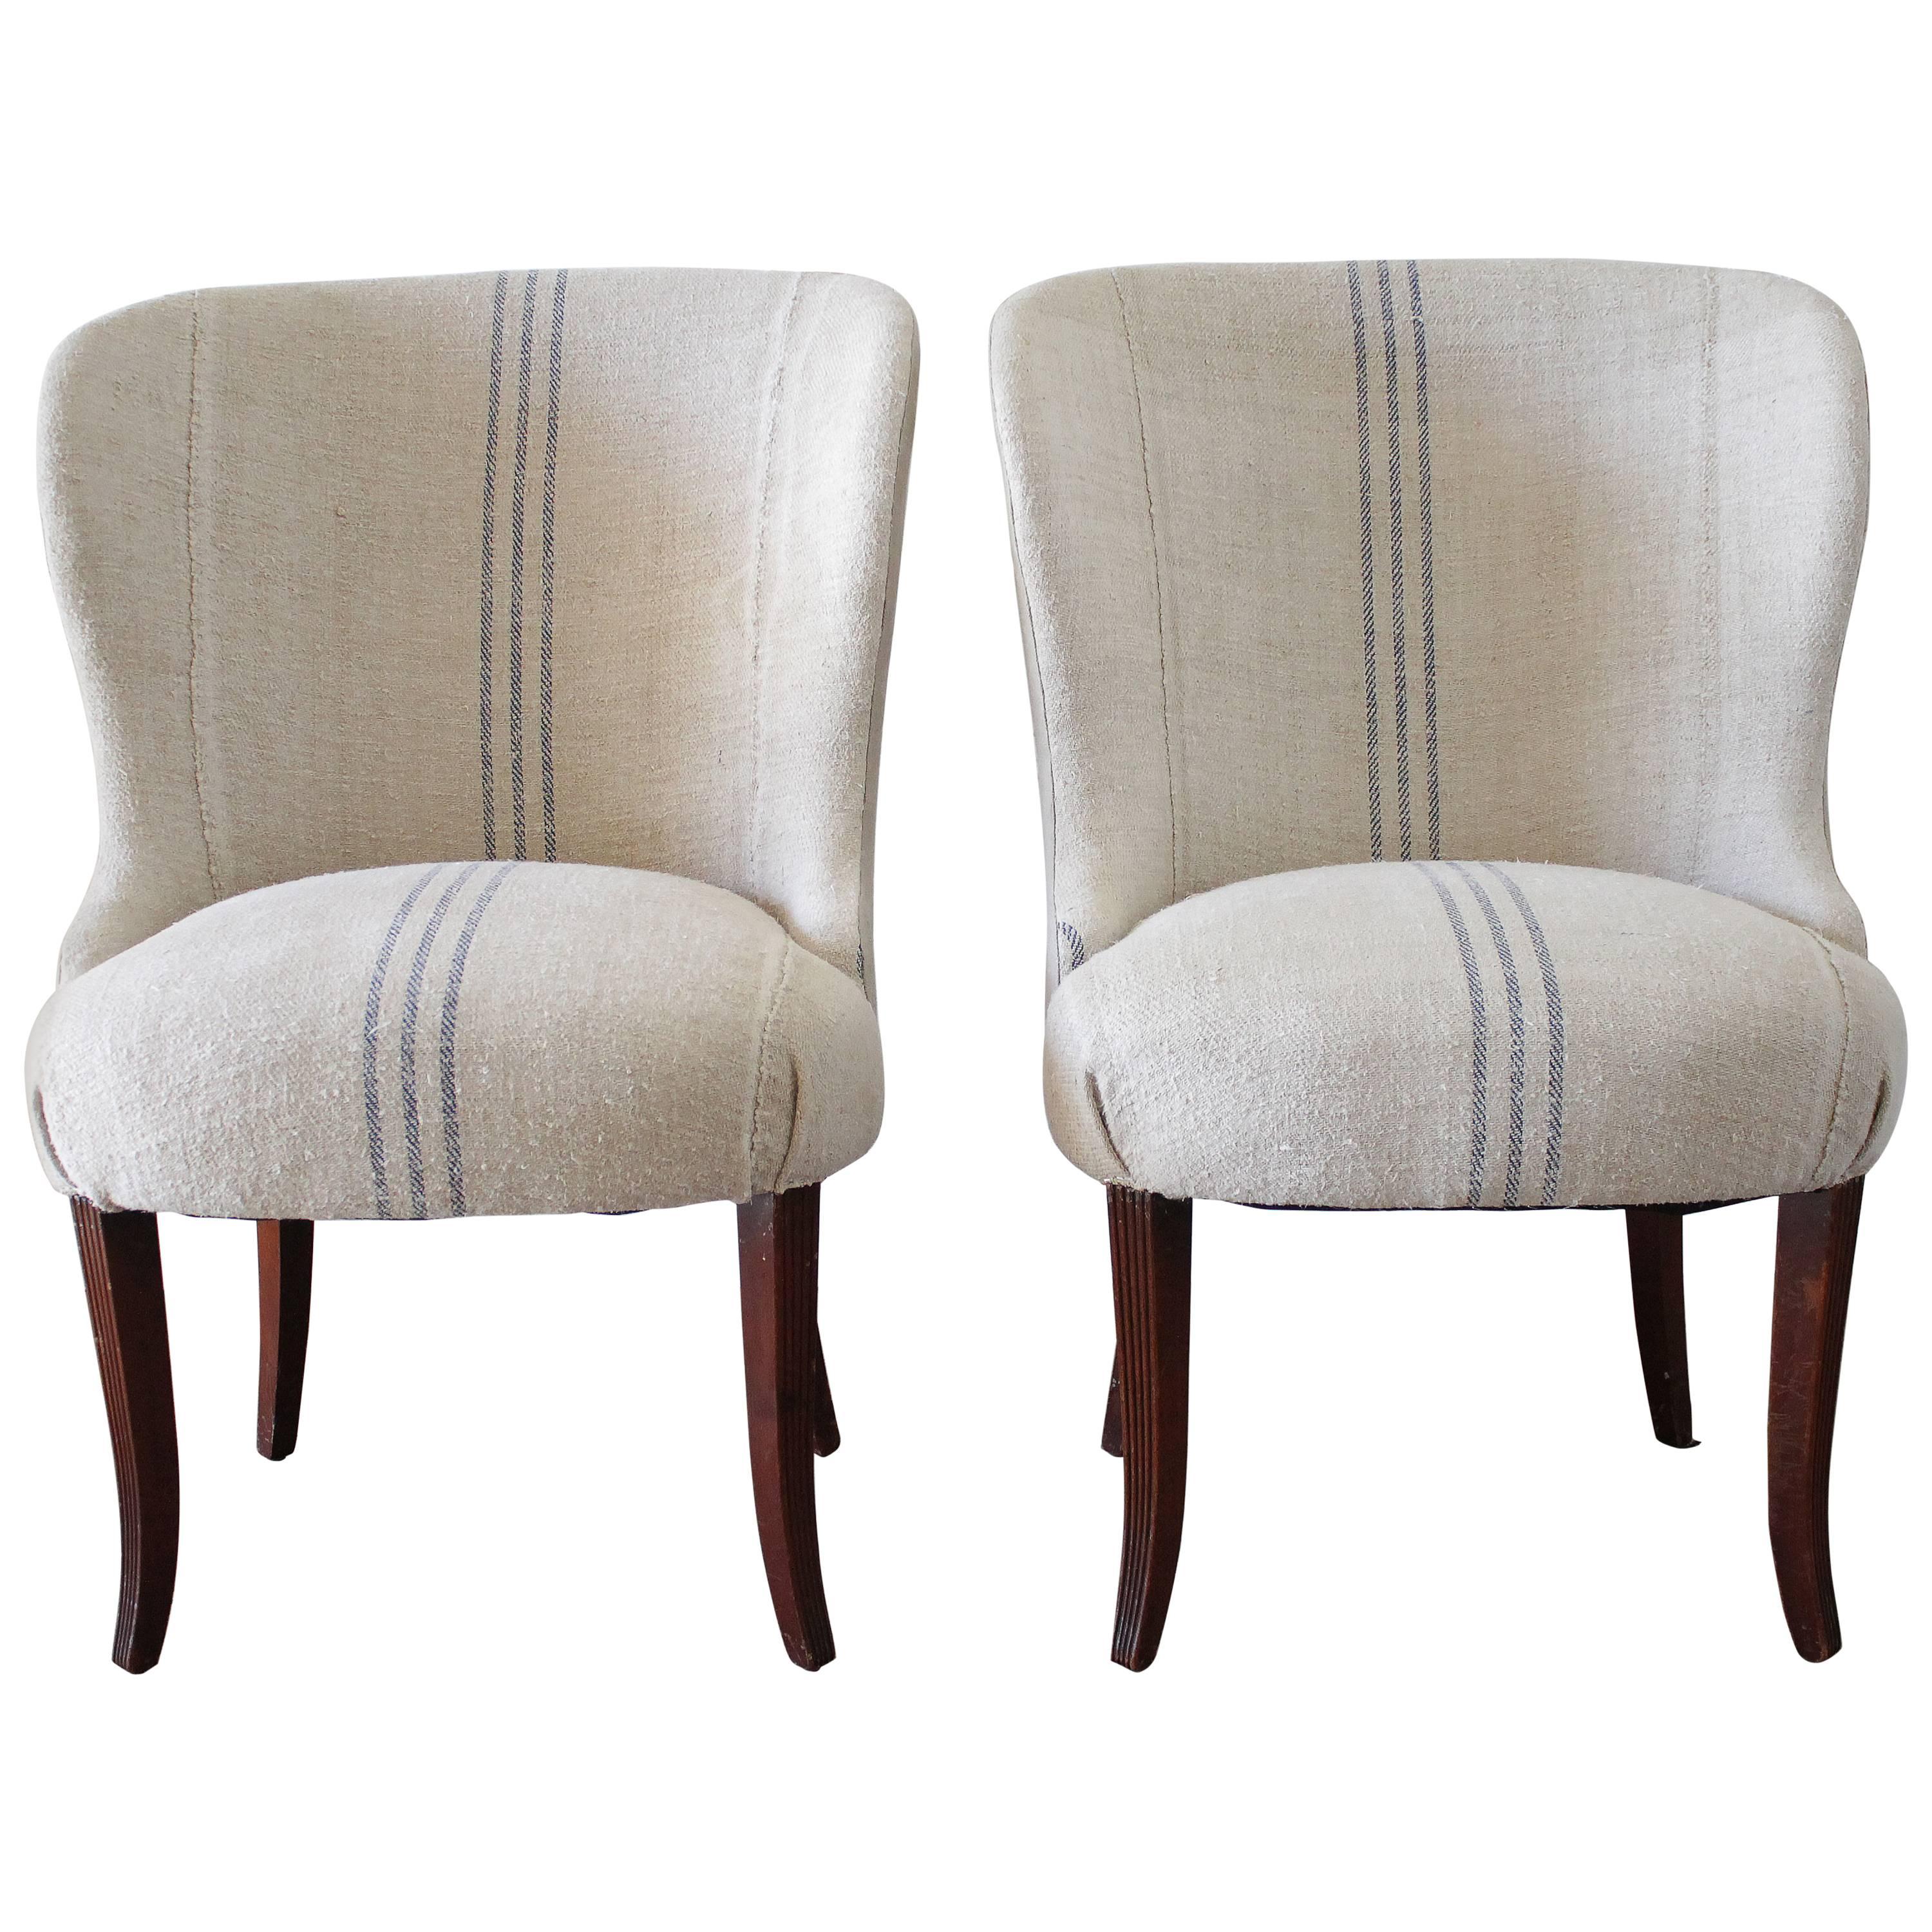 Pair of Ralph Lauren Wing Chairs in Antique French Linen Grain Sack